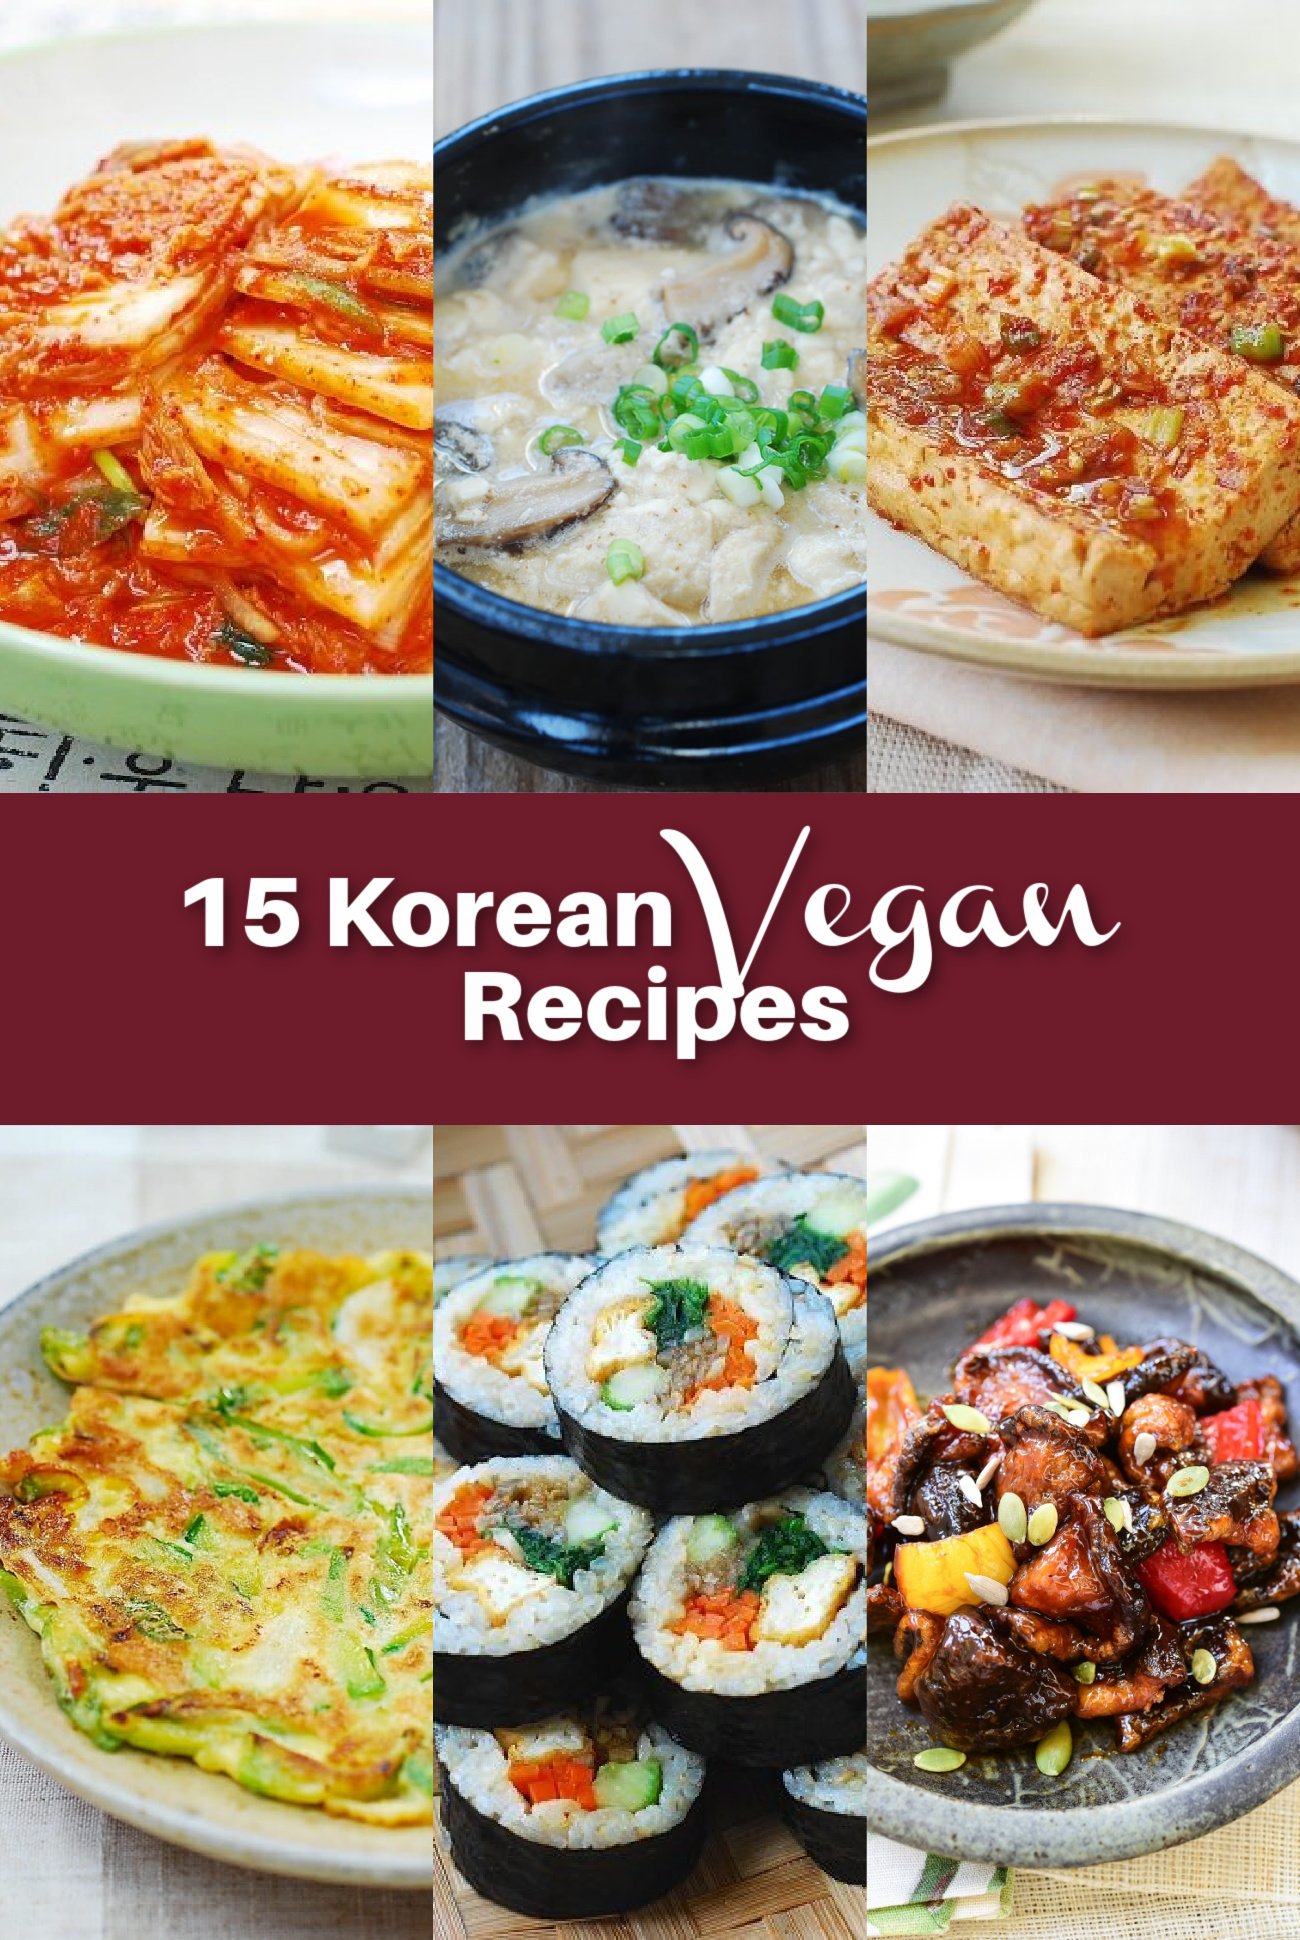 15 Vegan Recipes - 15 Korean Vegan Recipes